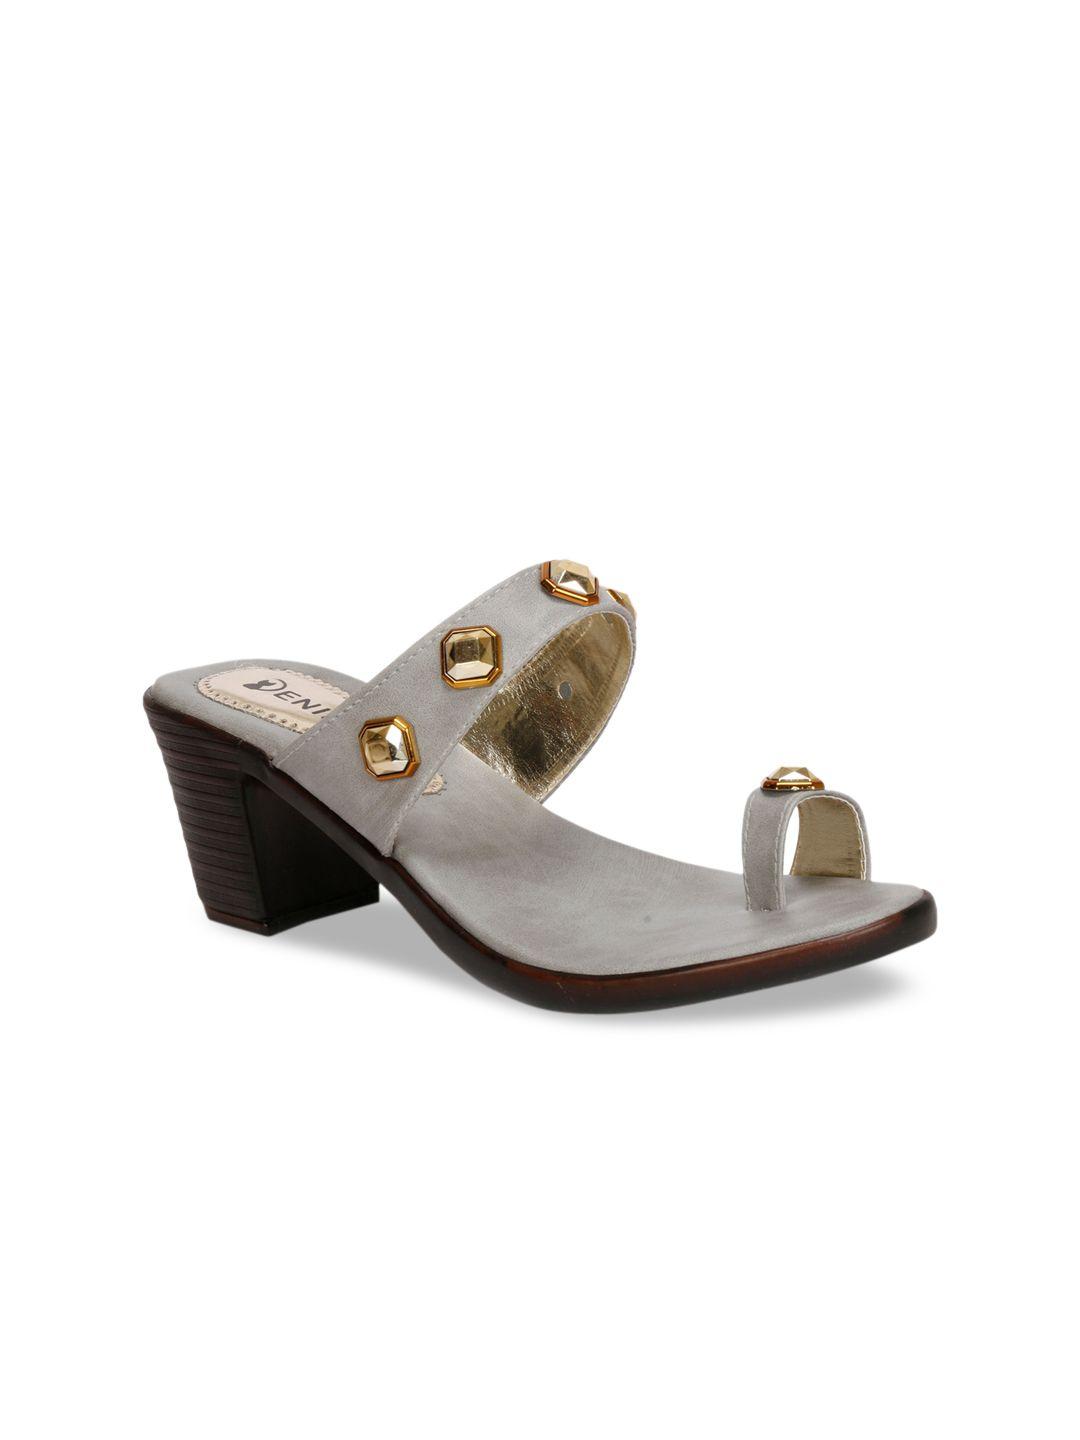 denill grey embellished block sandals